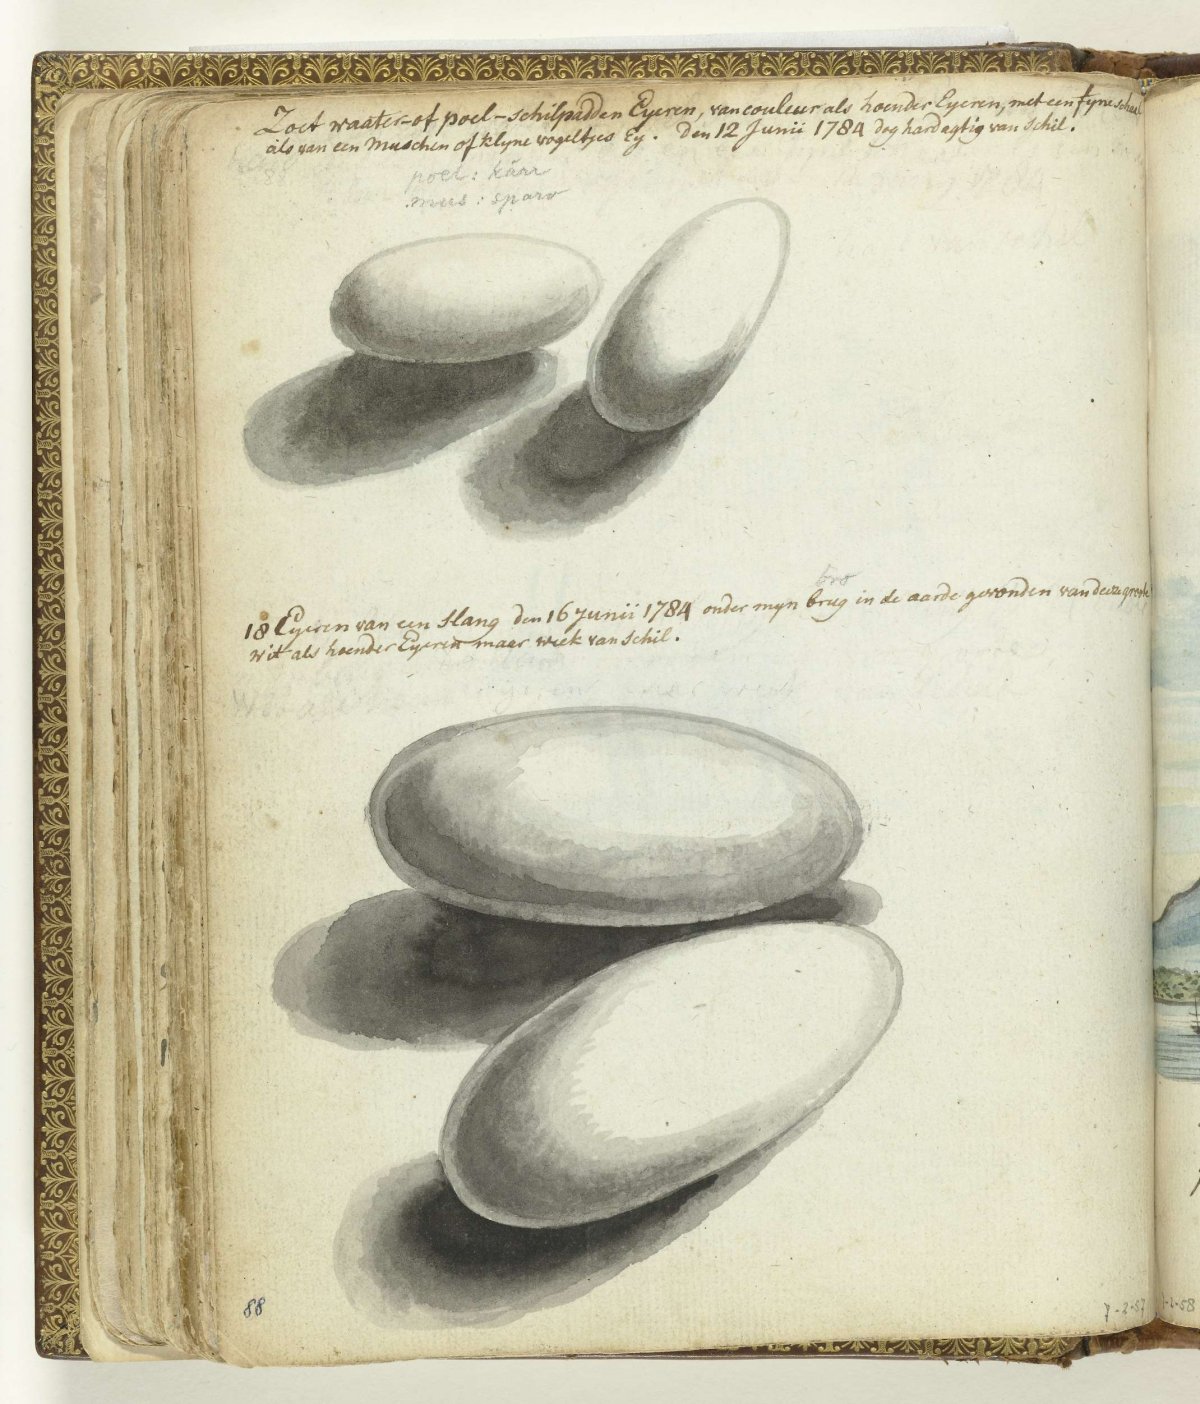 Turtle and snake eggs, Jan Brandes, 1784